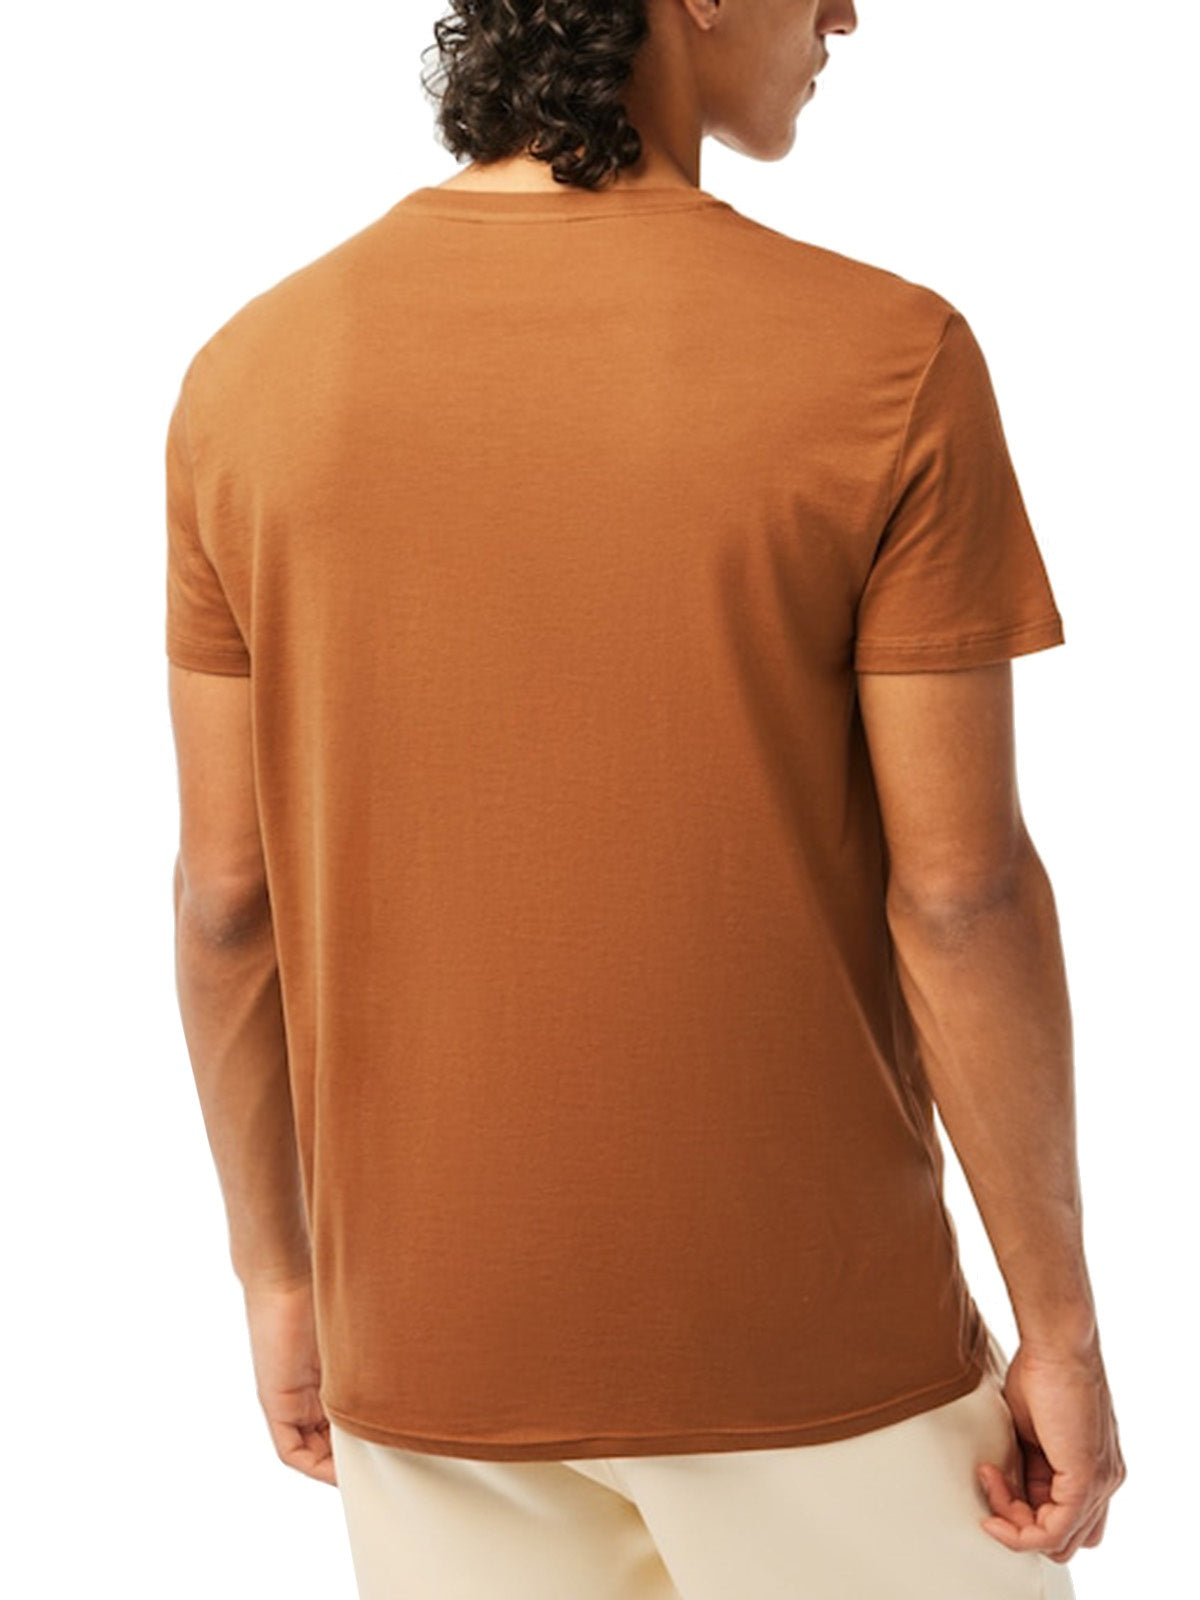 T-shirt Uomo Lacoste - Crew Neck Pima Cotton Jersey T-Shirt - Marrone